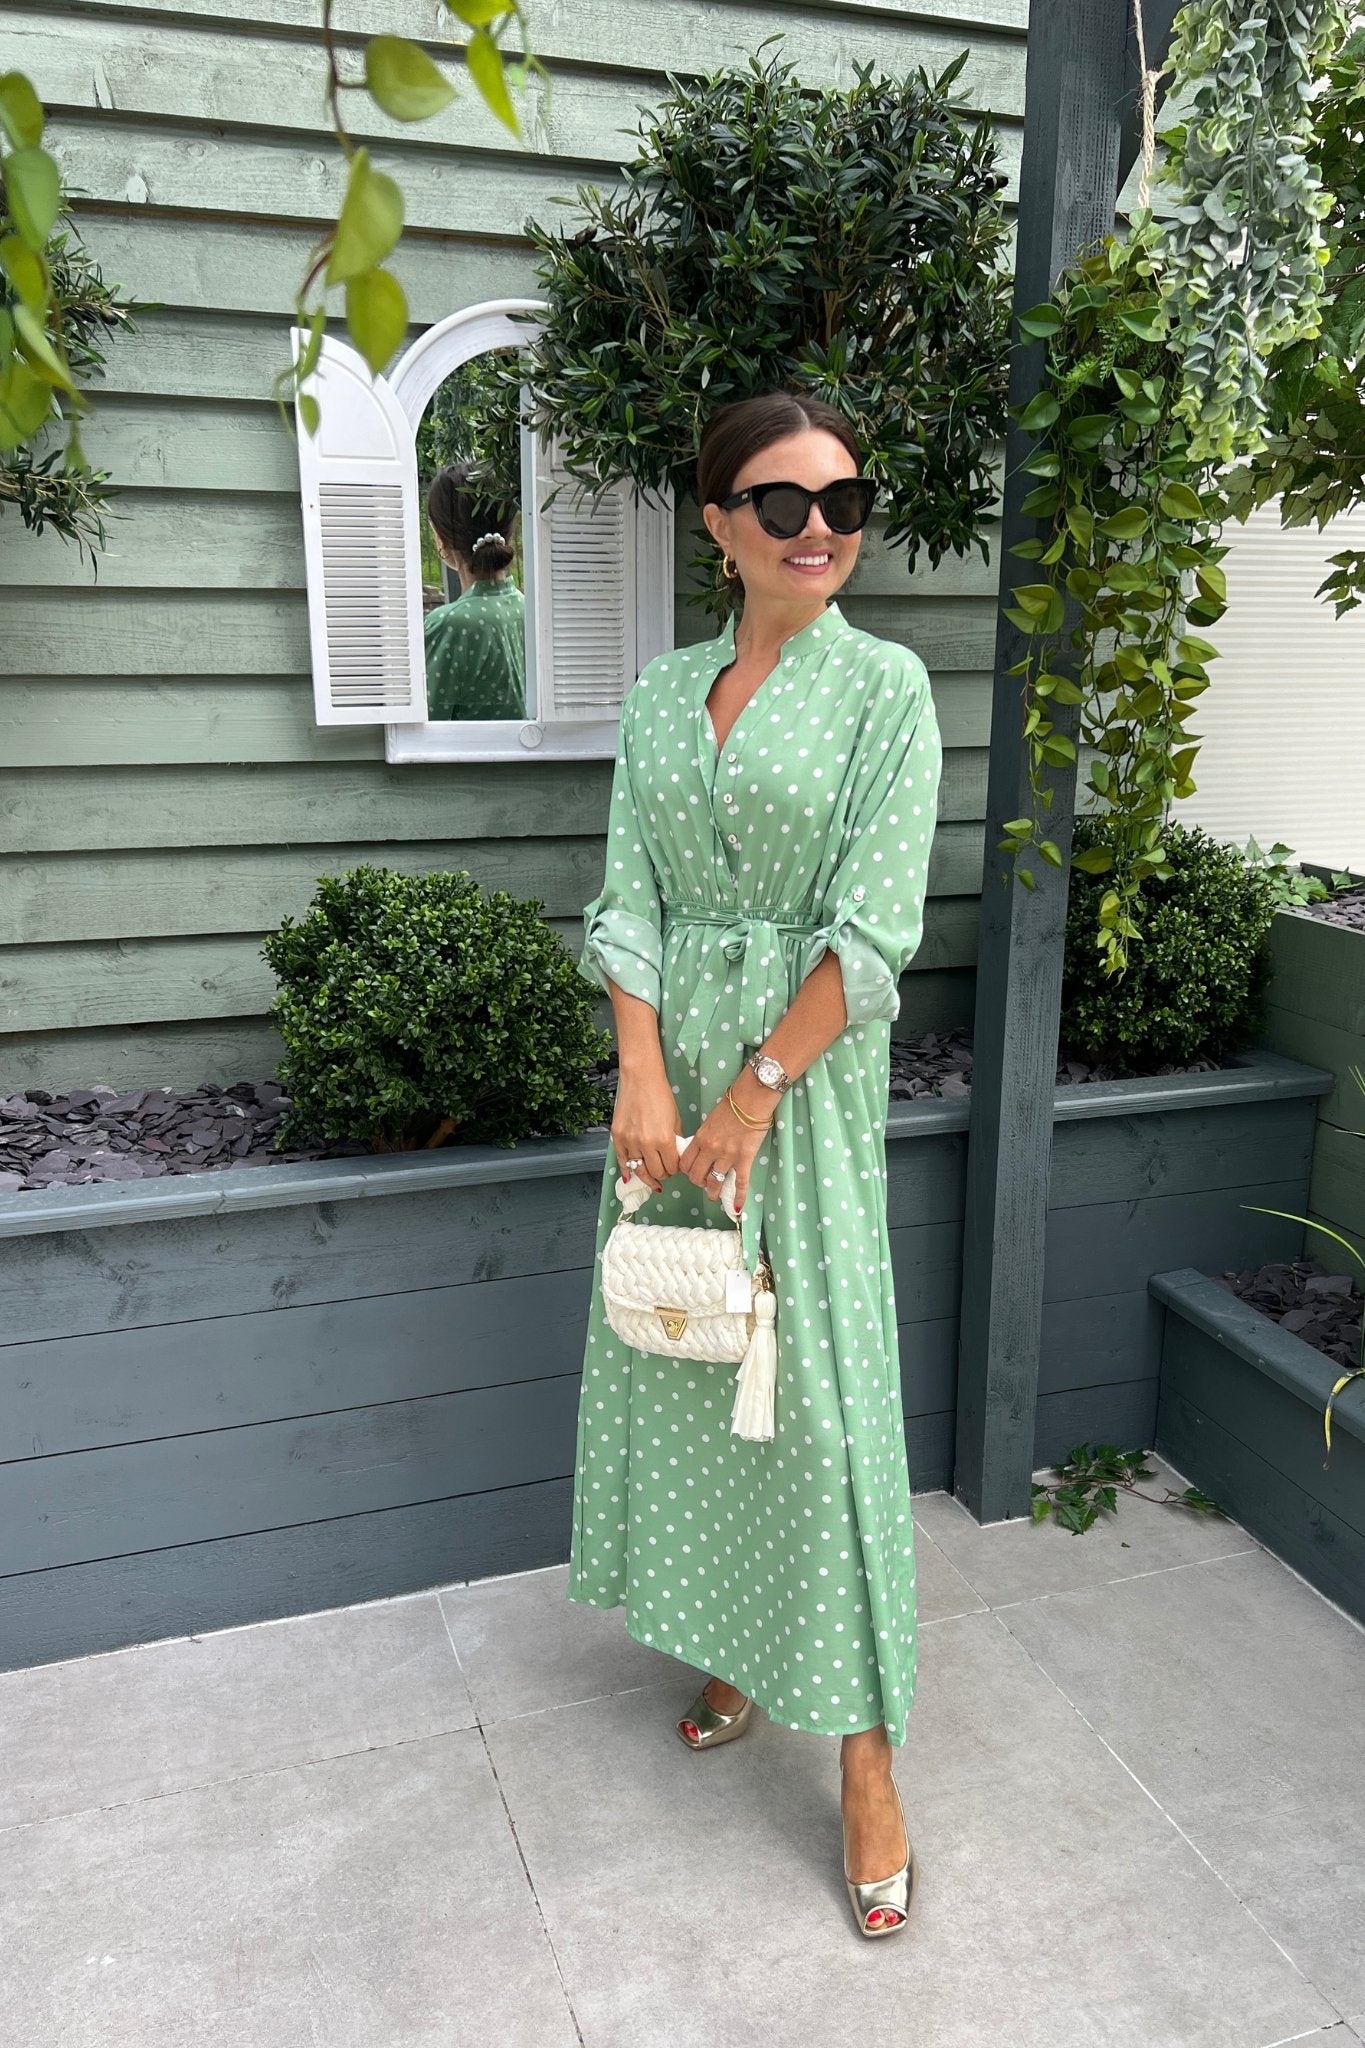 Polly Polka Dot Dress In Green - The Walk in Wardrobe